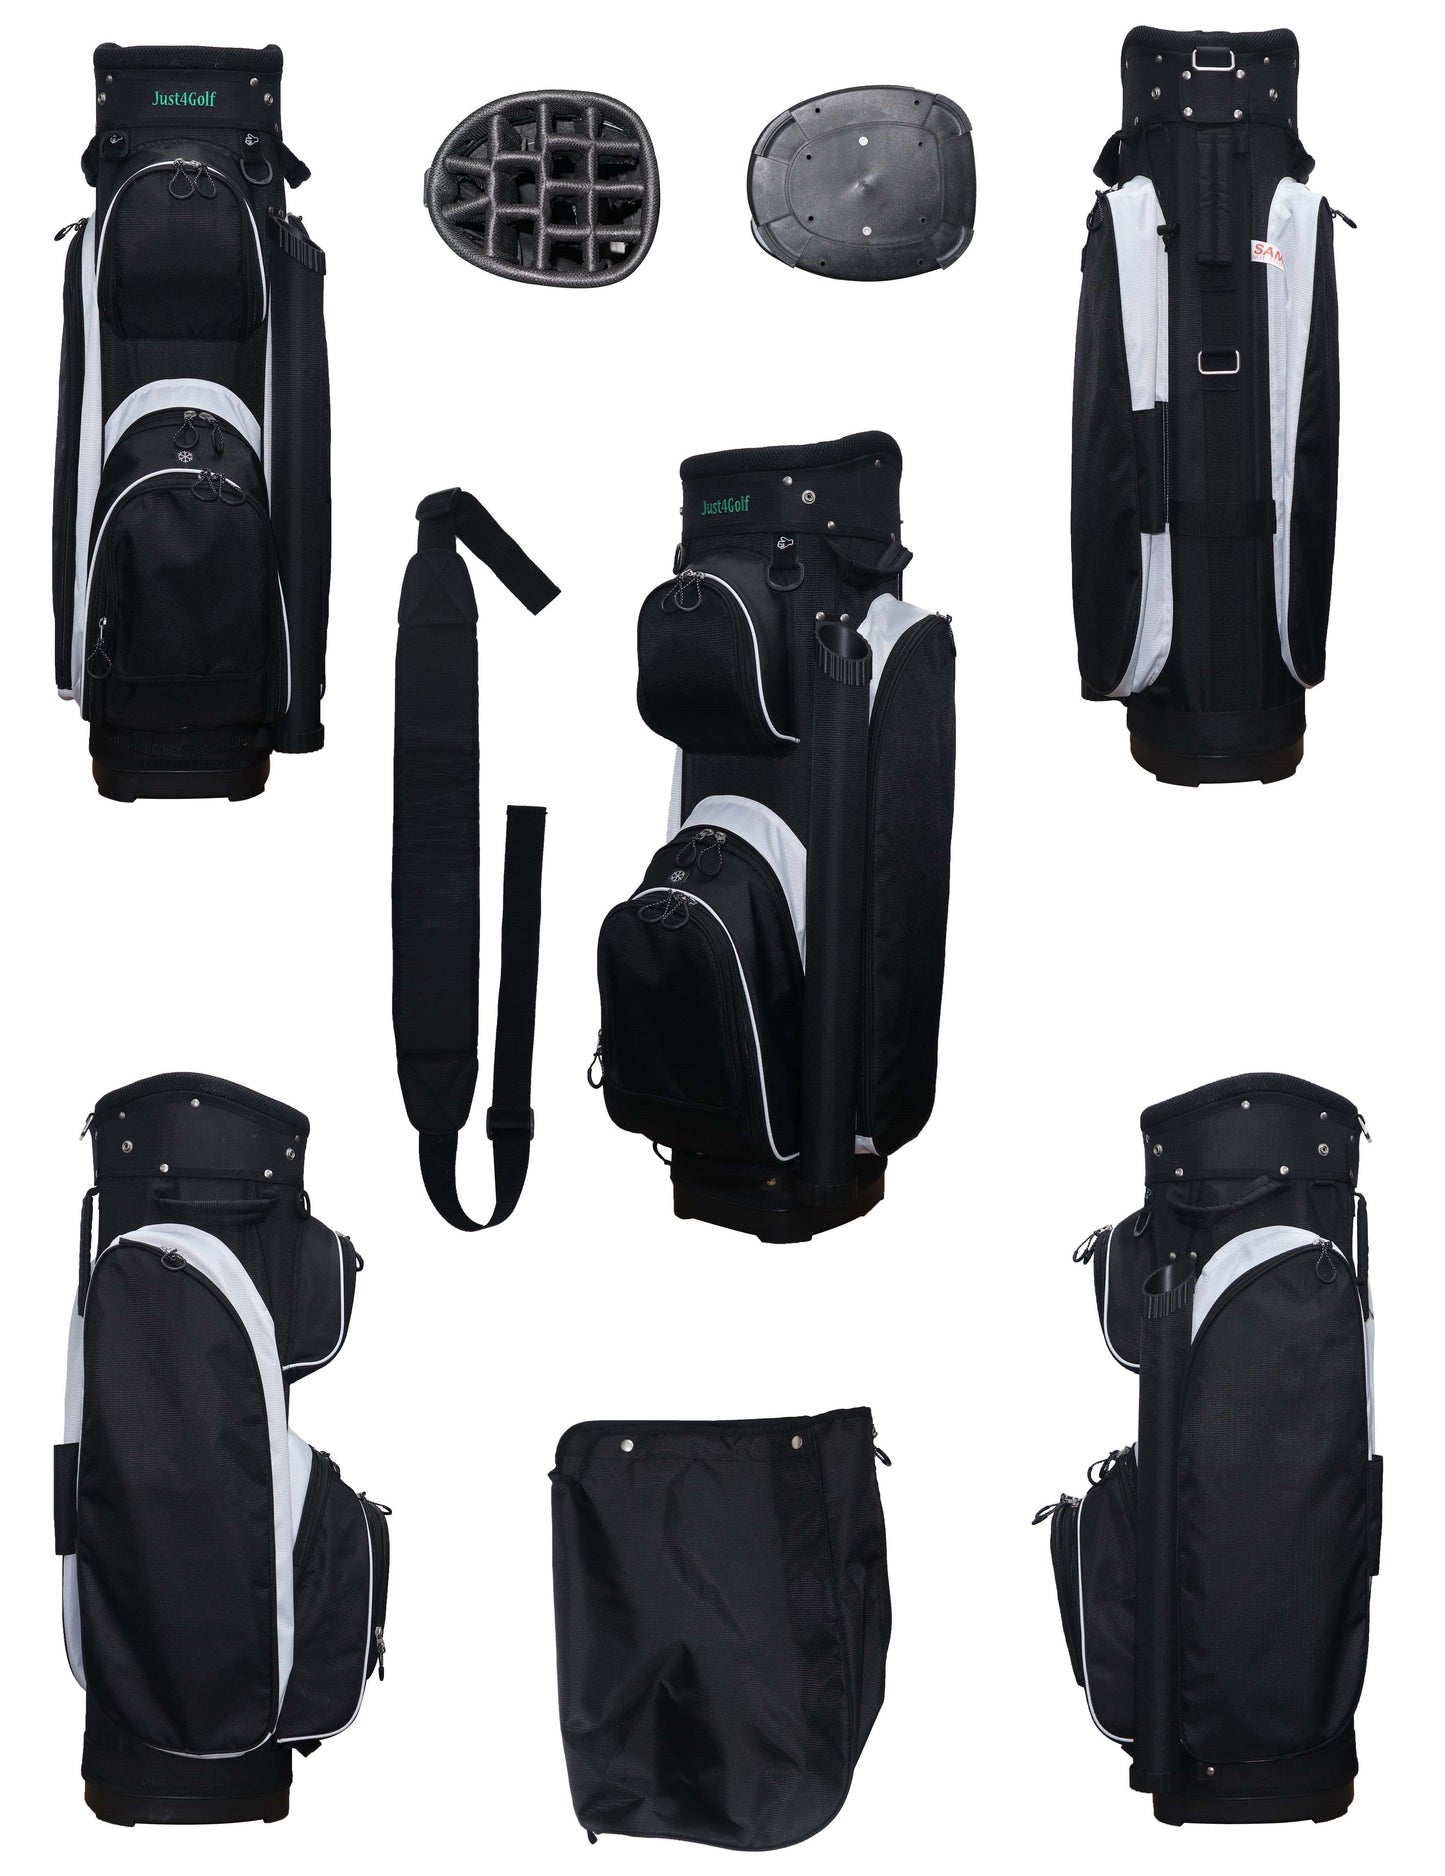 Golf Bag Gray / Cart Size - Super Sale!